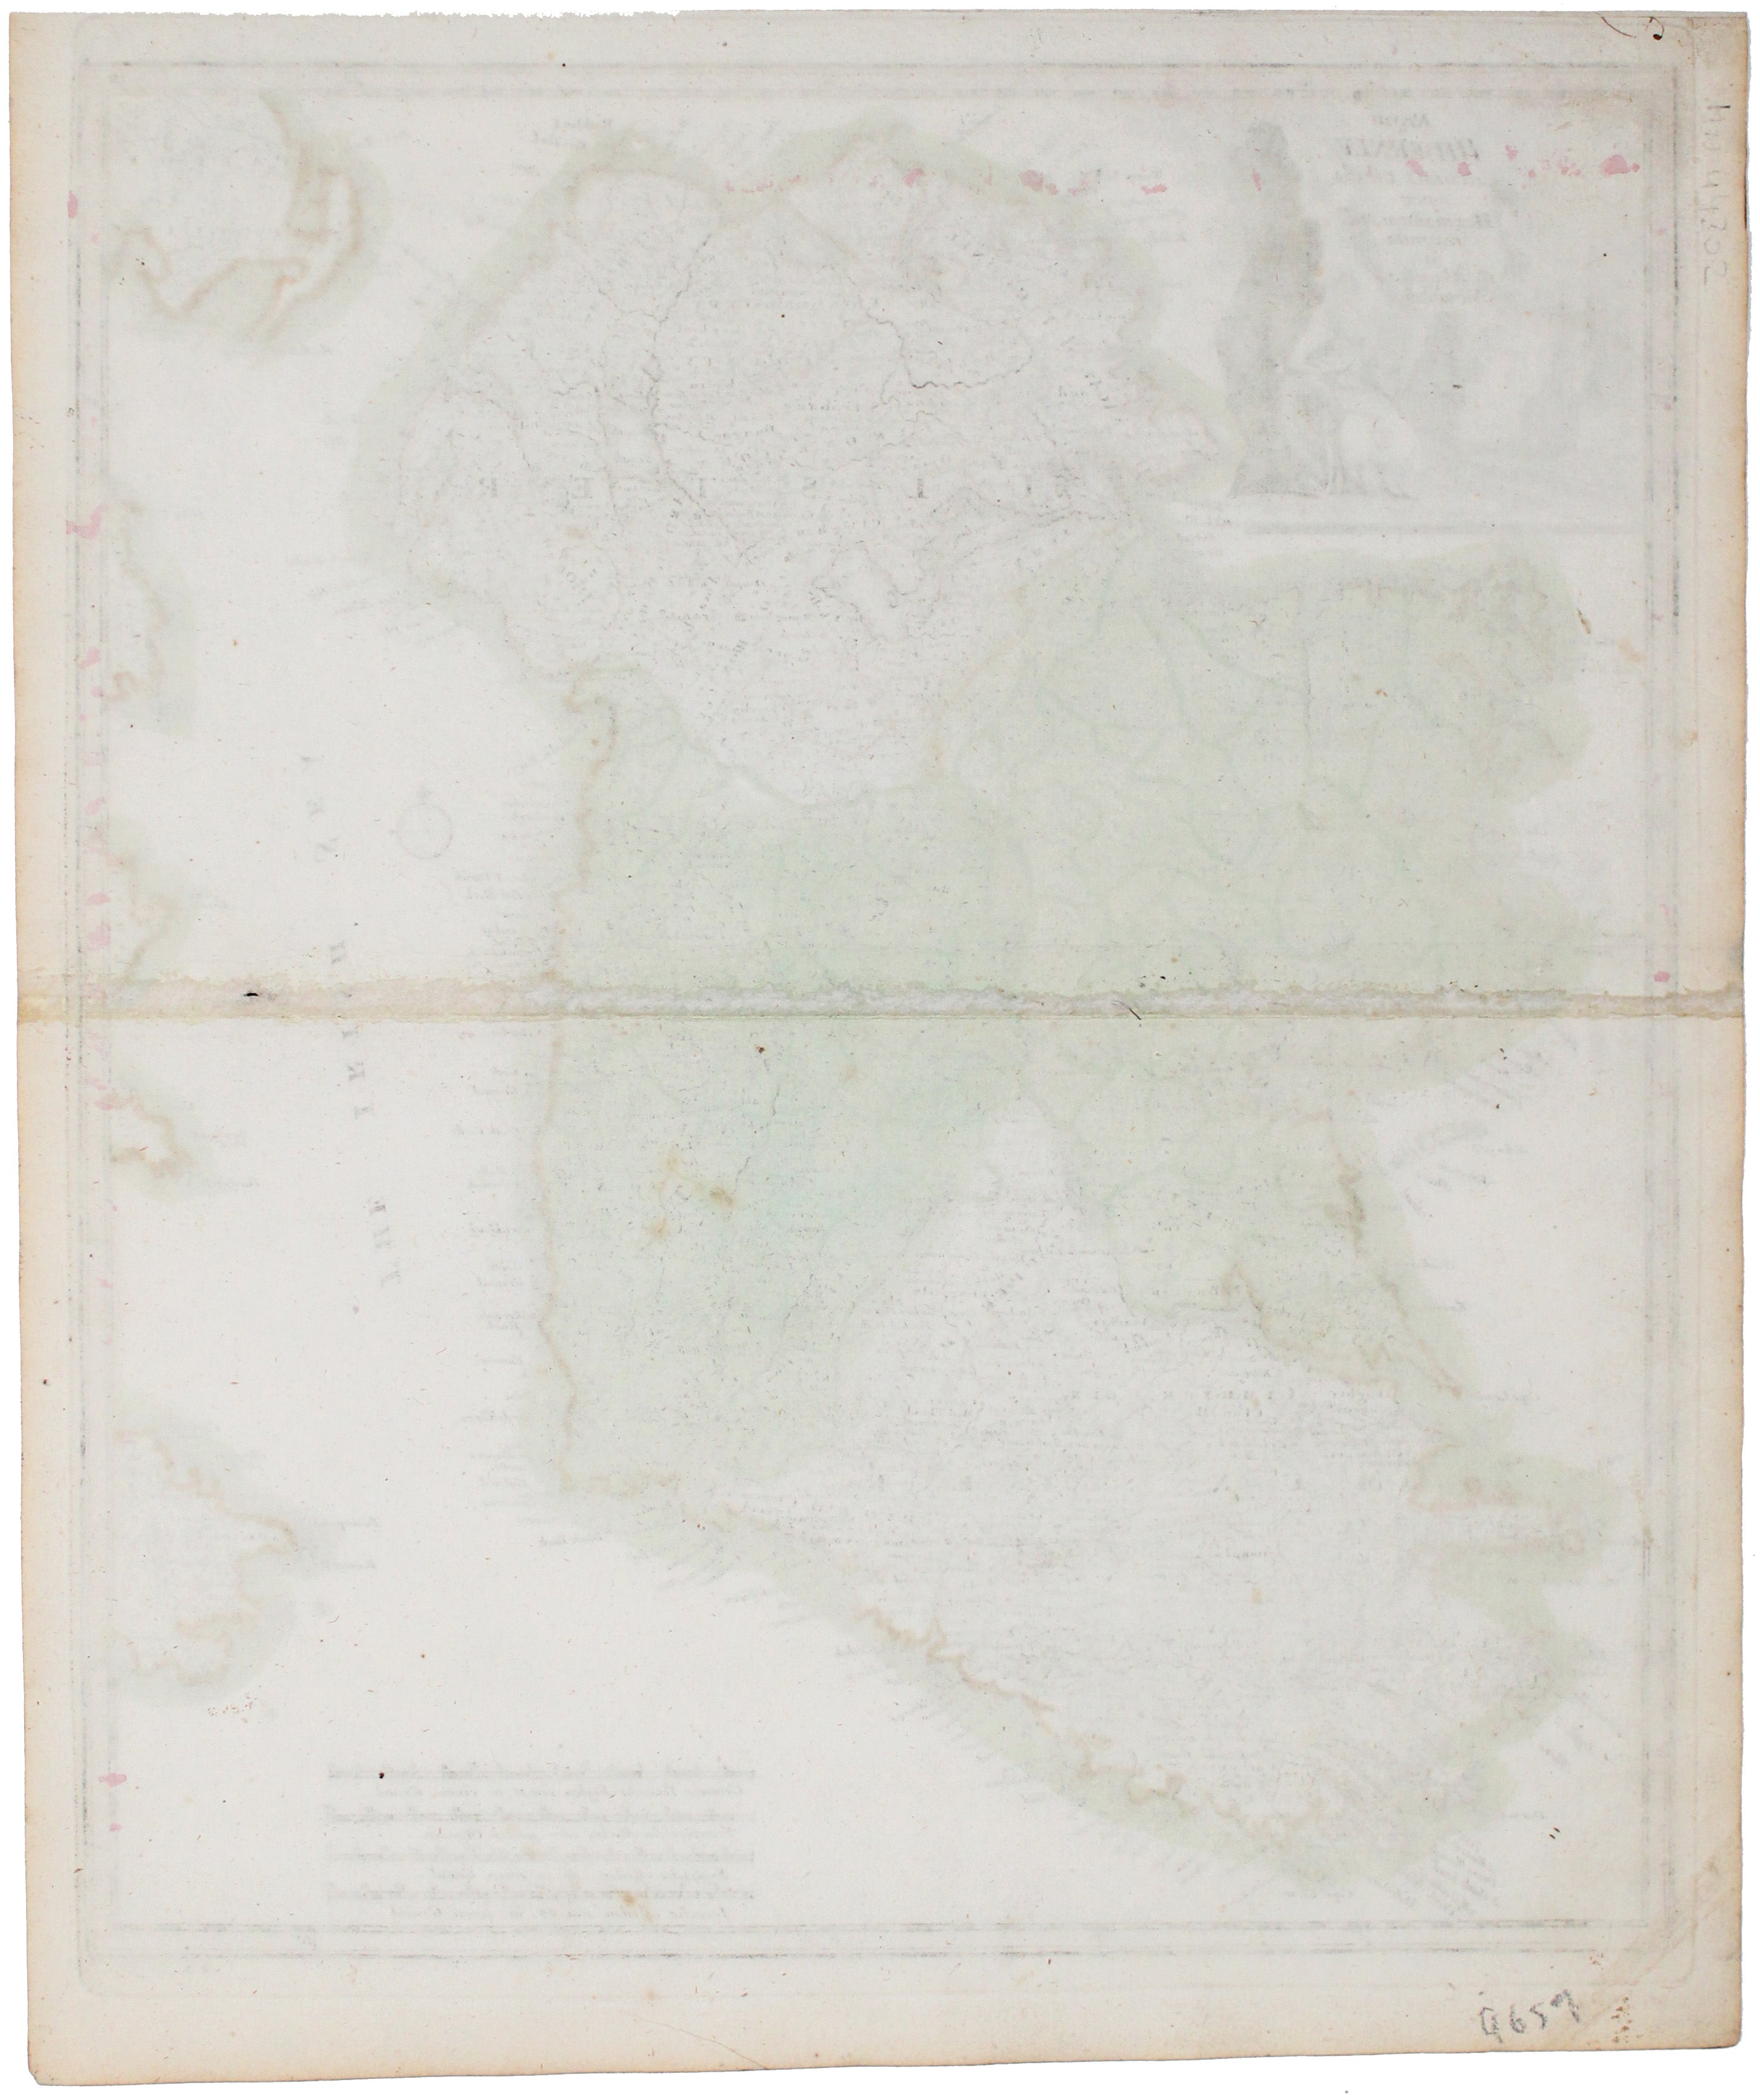 Weigel's Map of Ireland